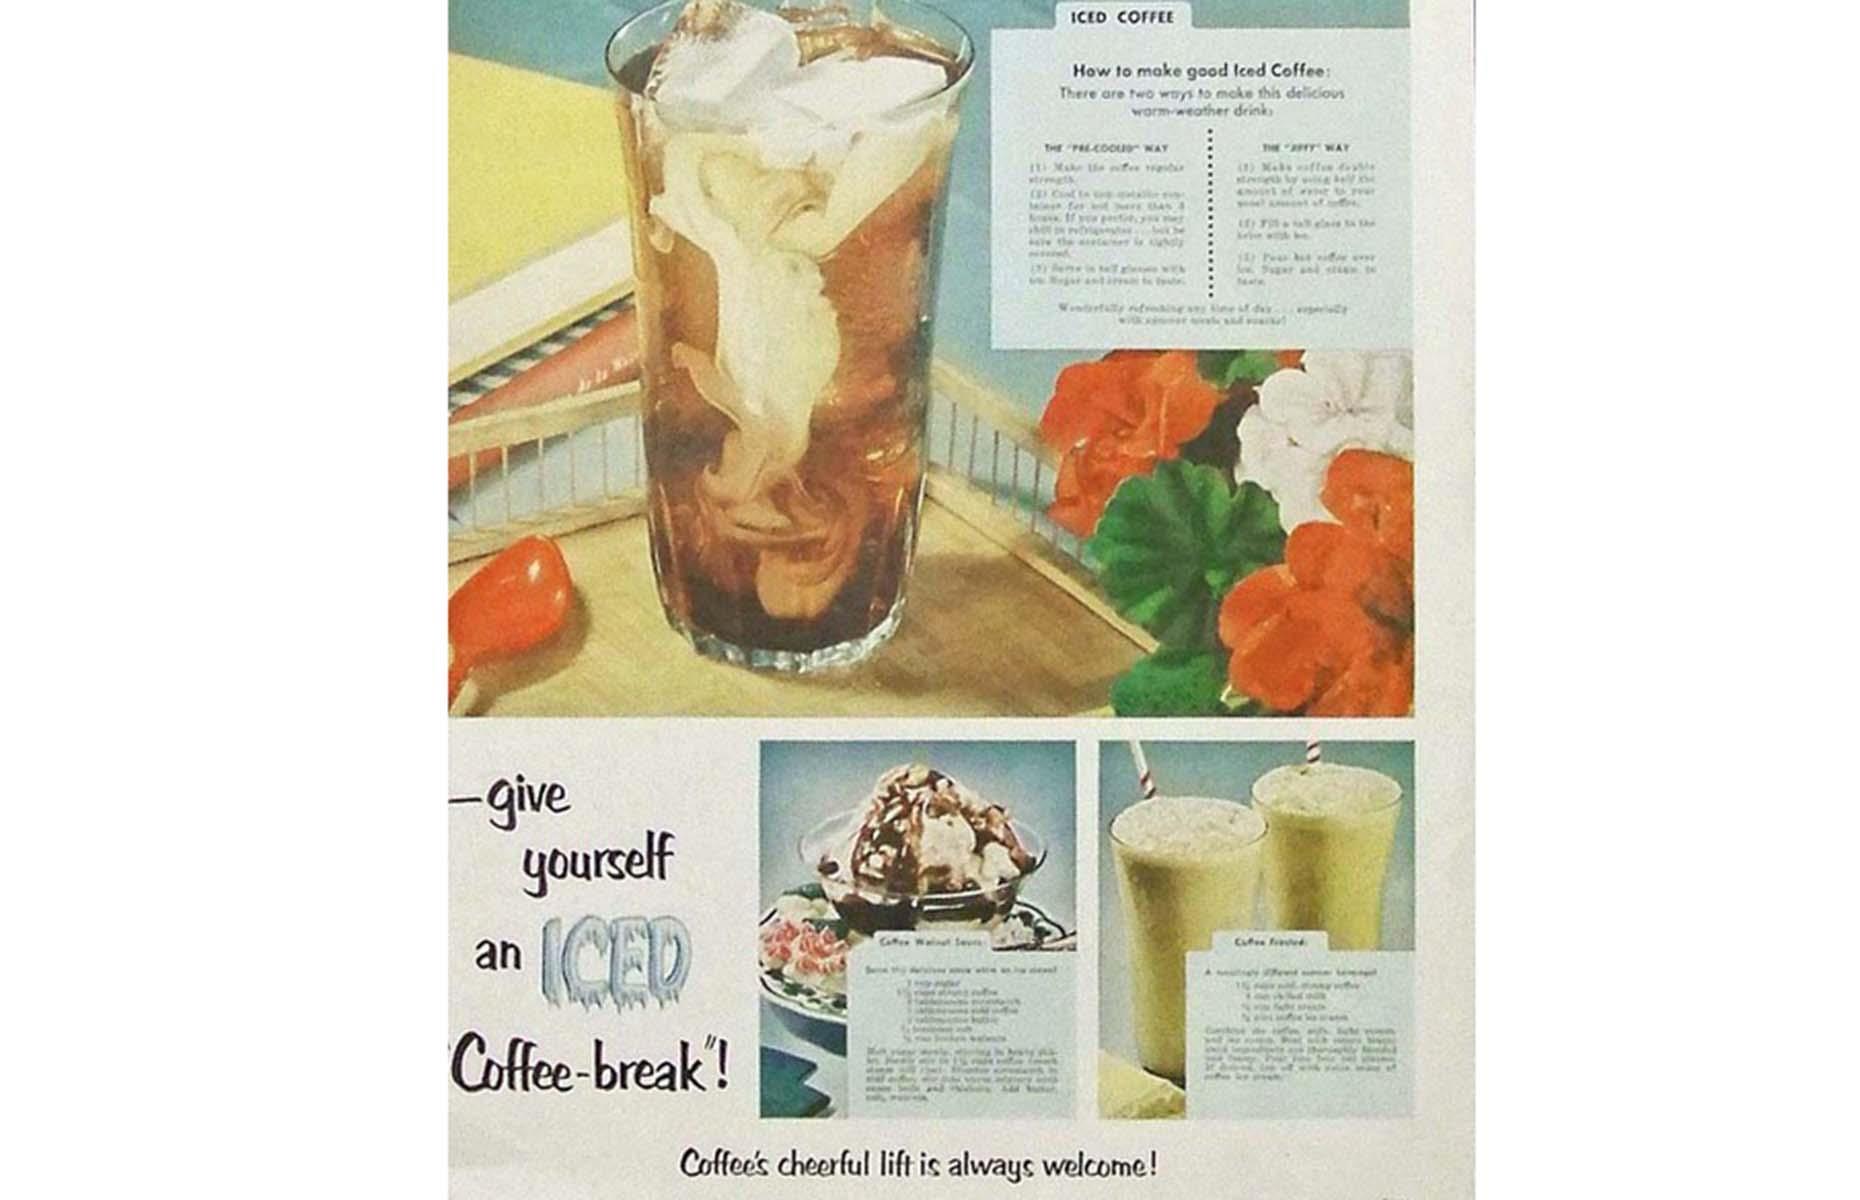 Pan American Coffee Bureau: 1952